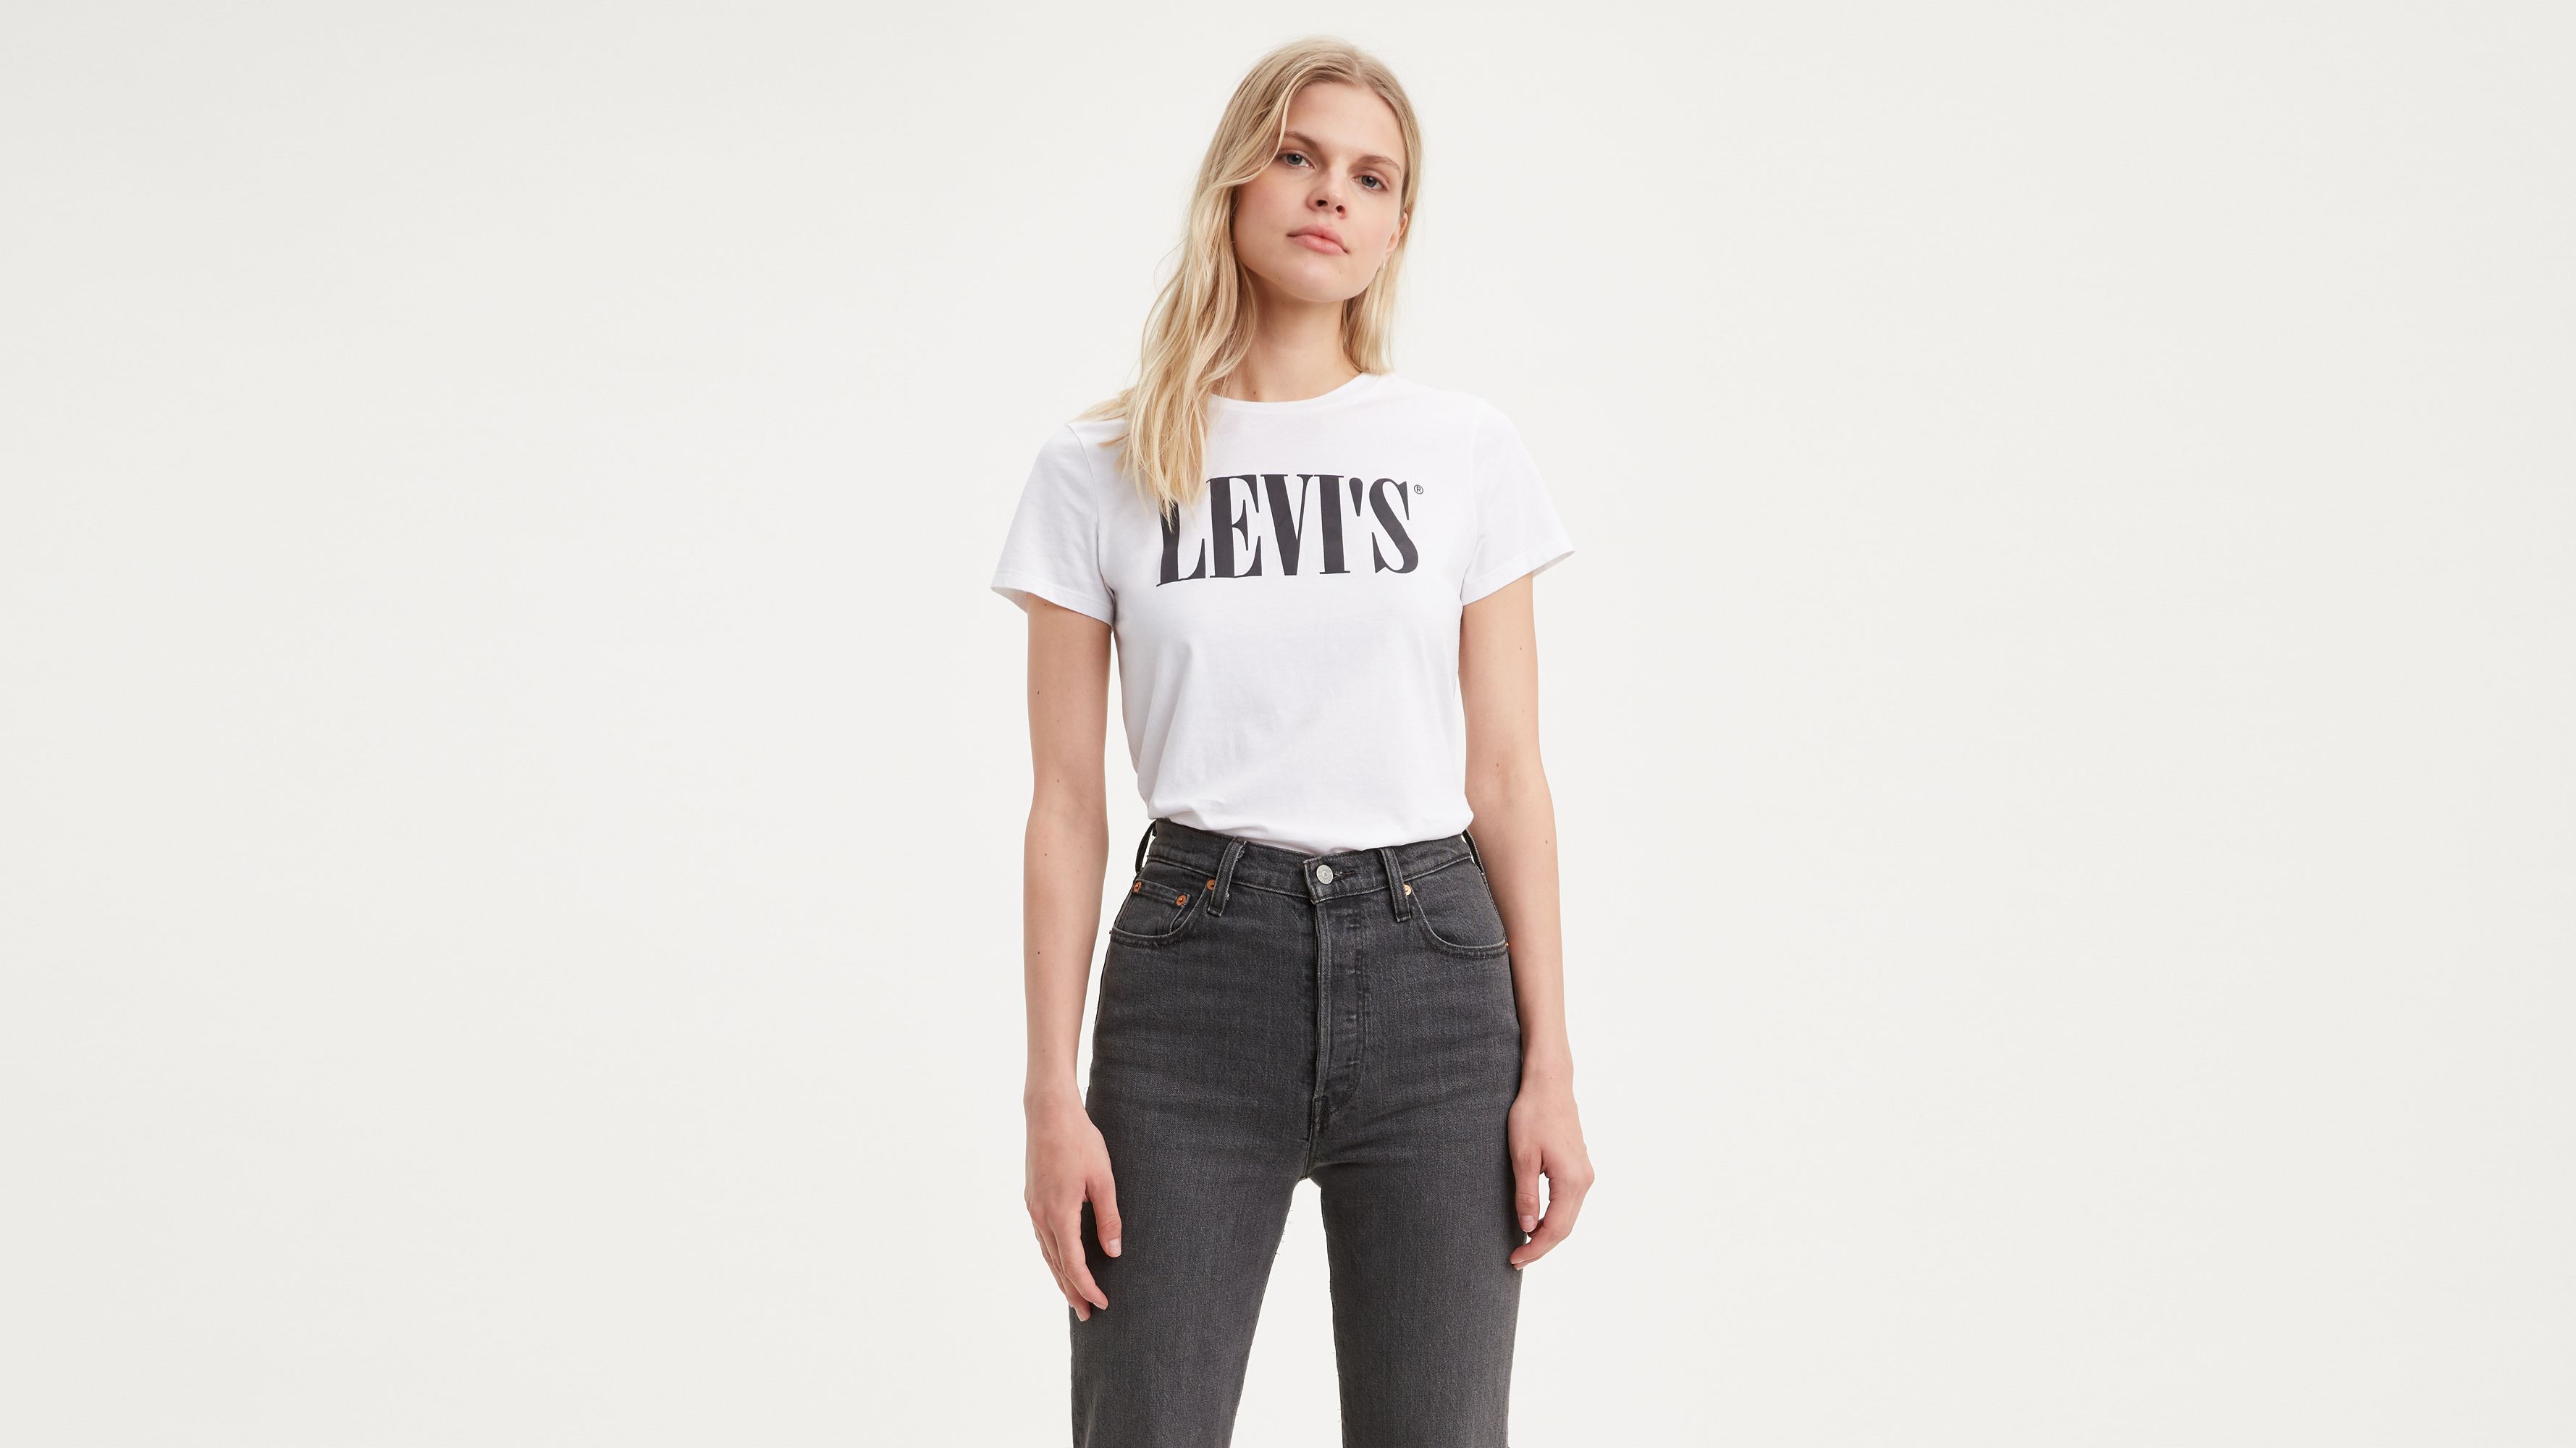 levis logo t shirt white